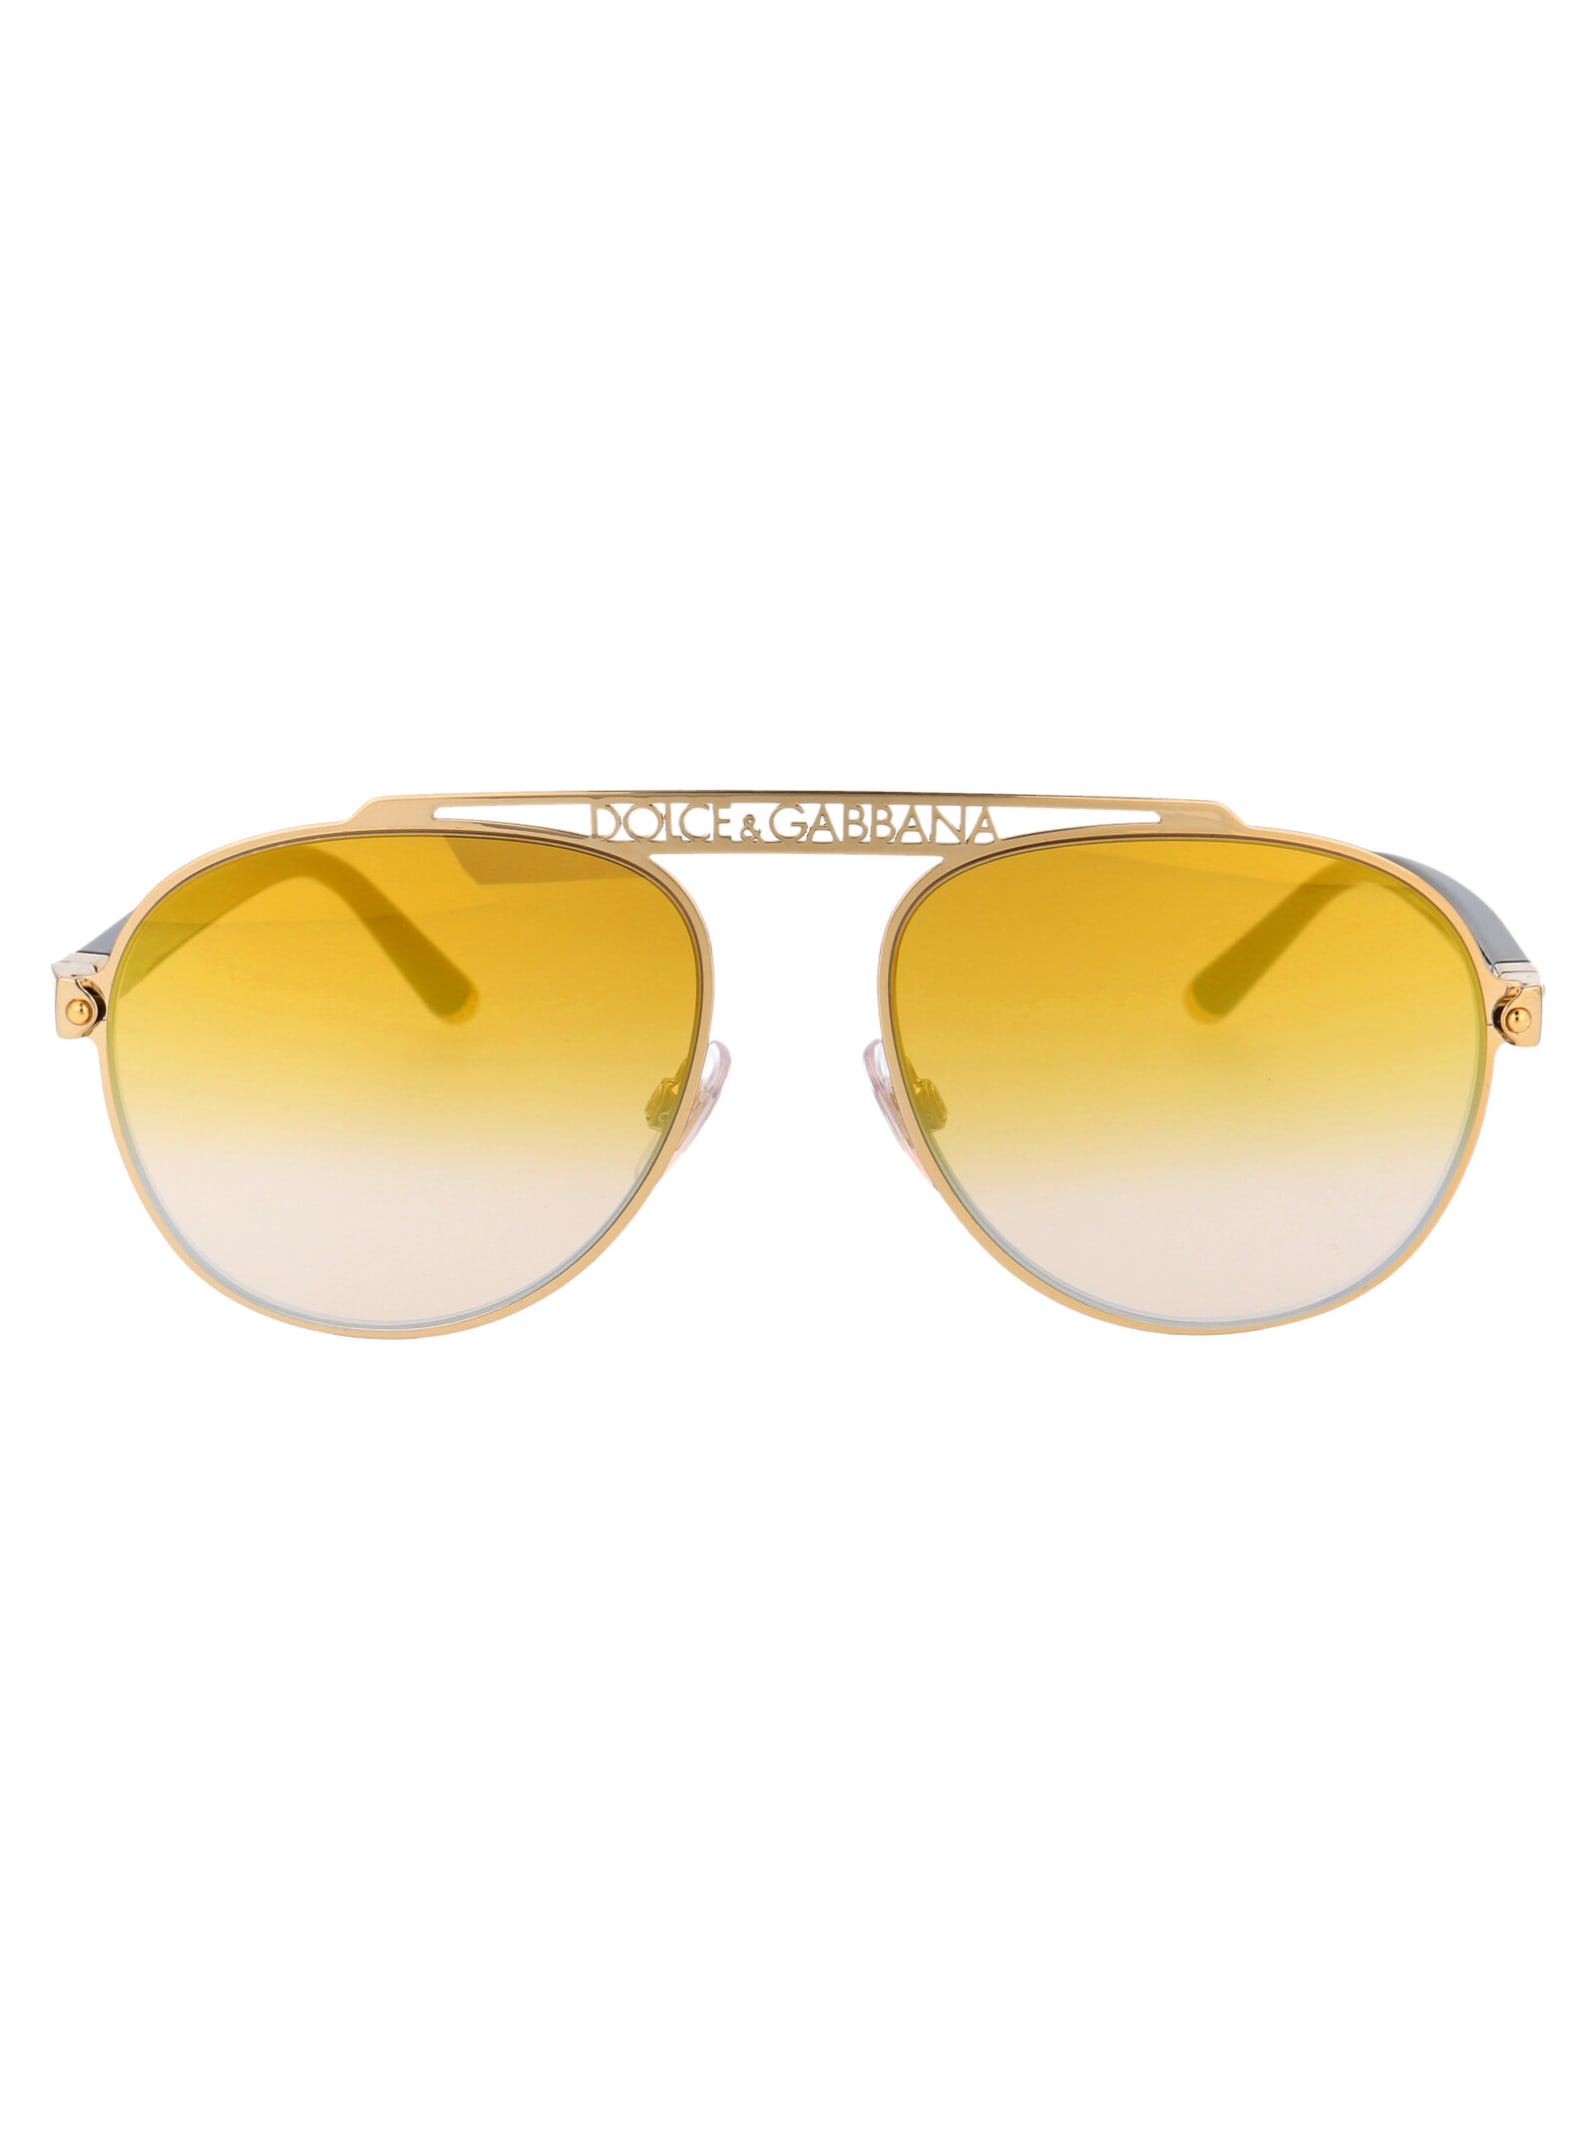 Dolce & Gabbana 0dg2235 Sunglasses